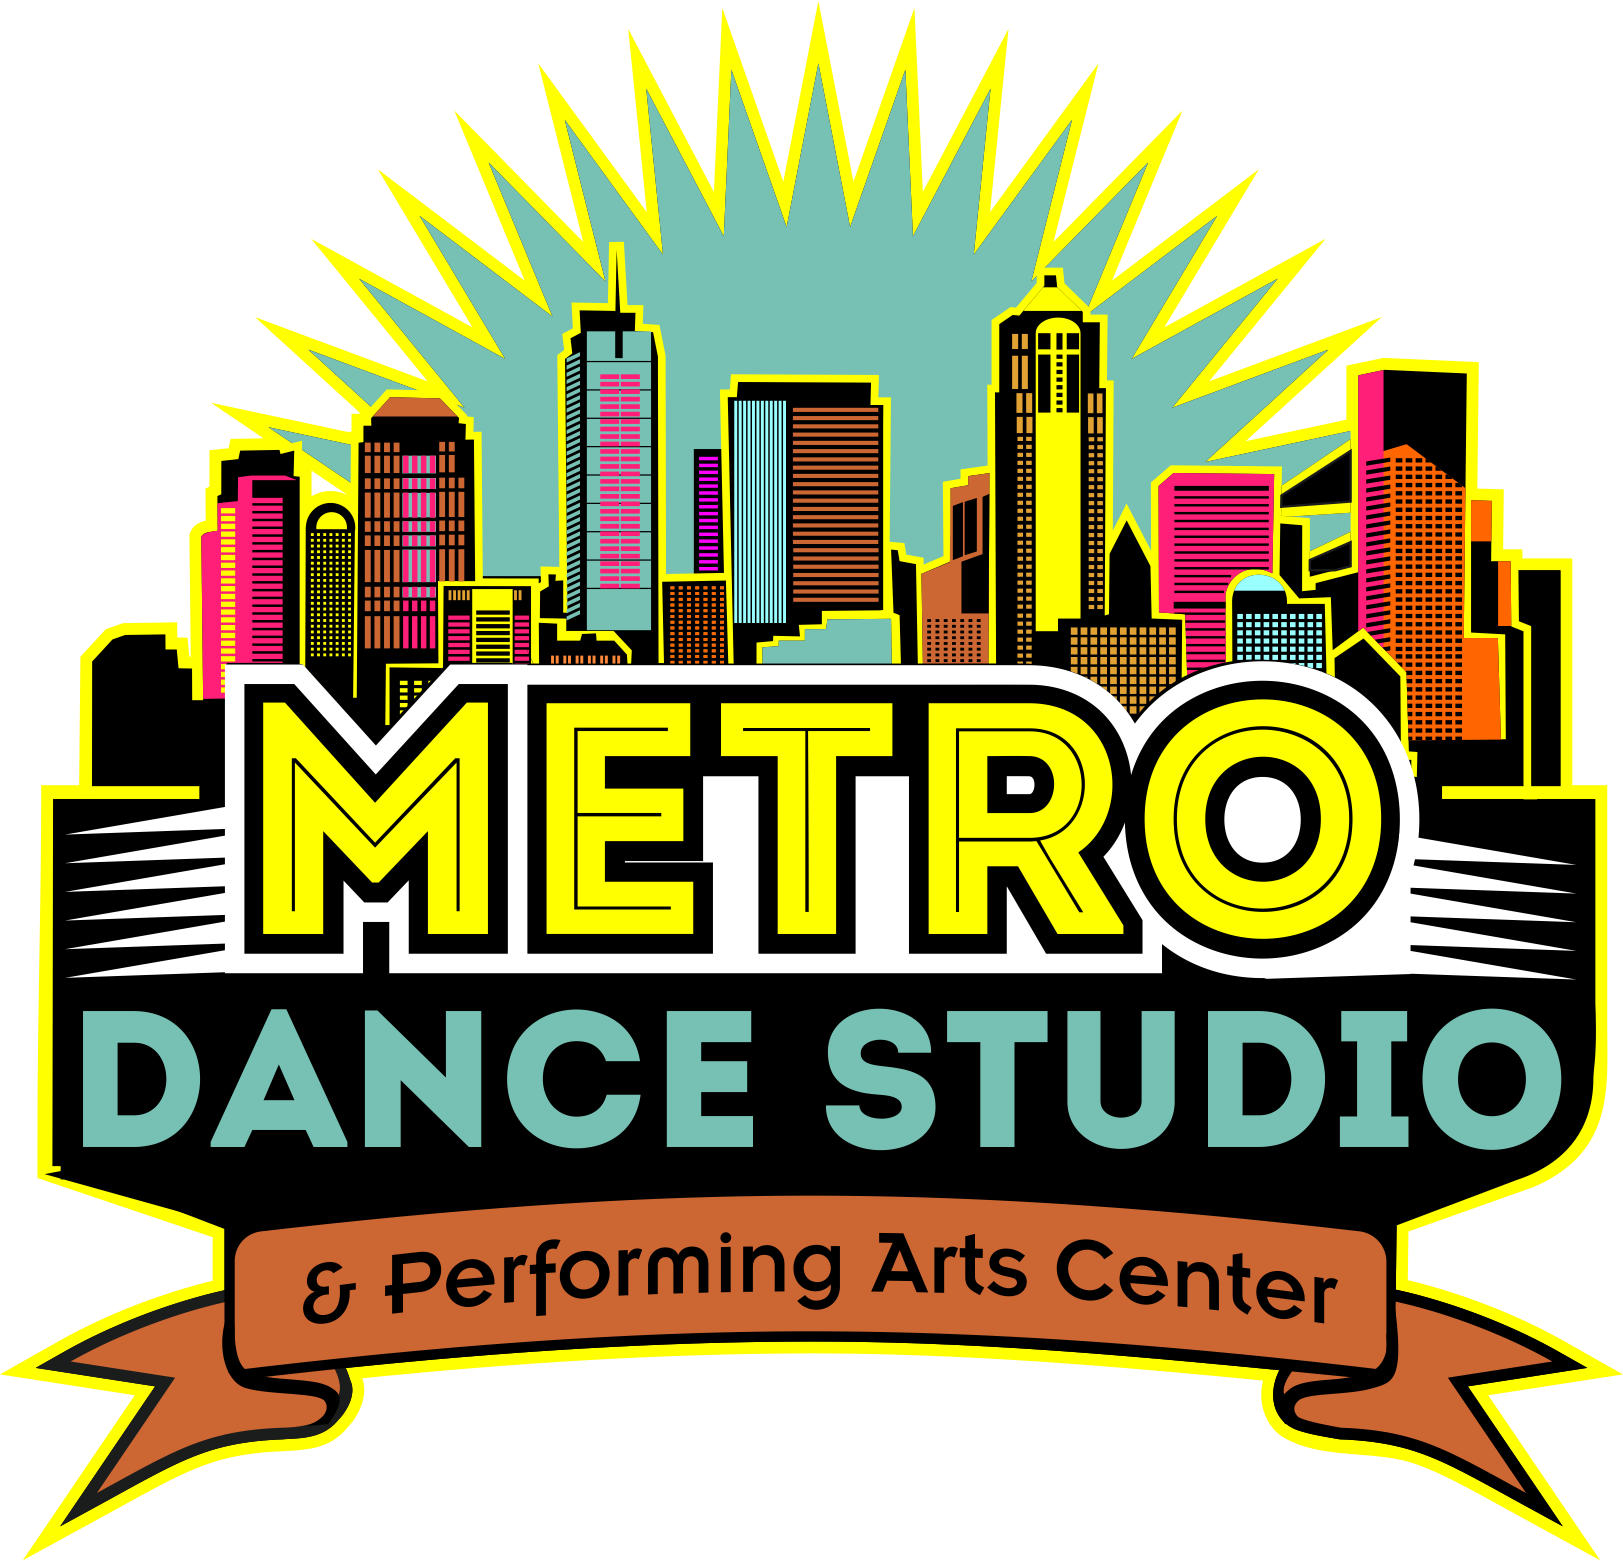 Metro Dance Studio, From The City Of Downtown Atlanta - Metro Dance Studio, From The City Of Downtown Atlanta (1623x1561)